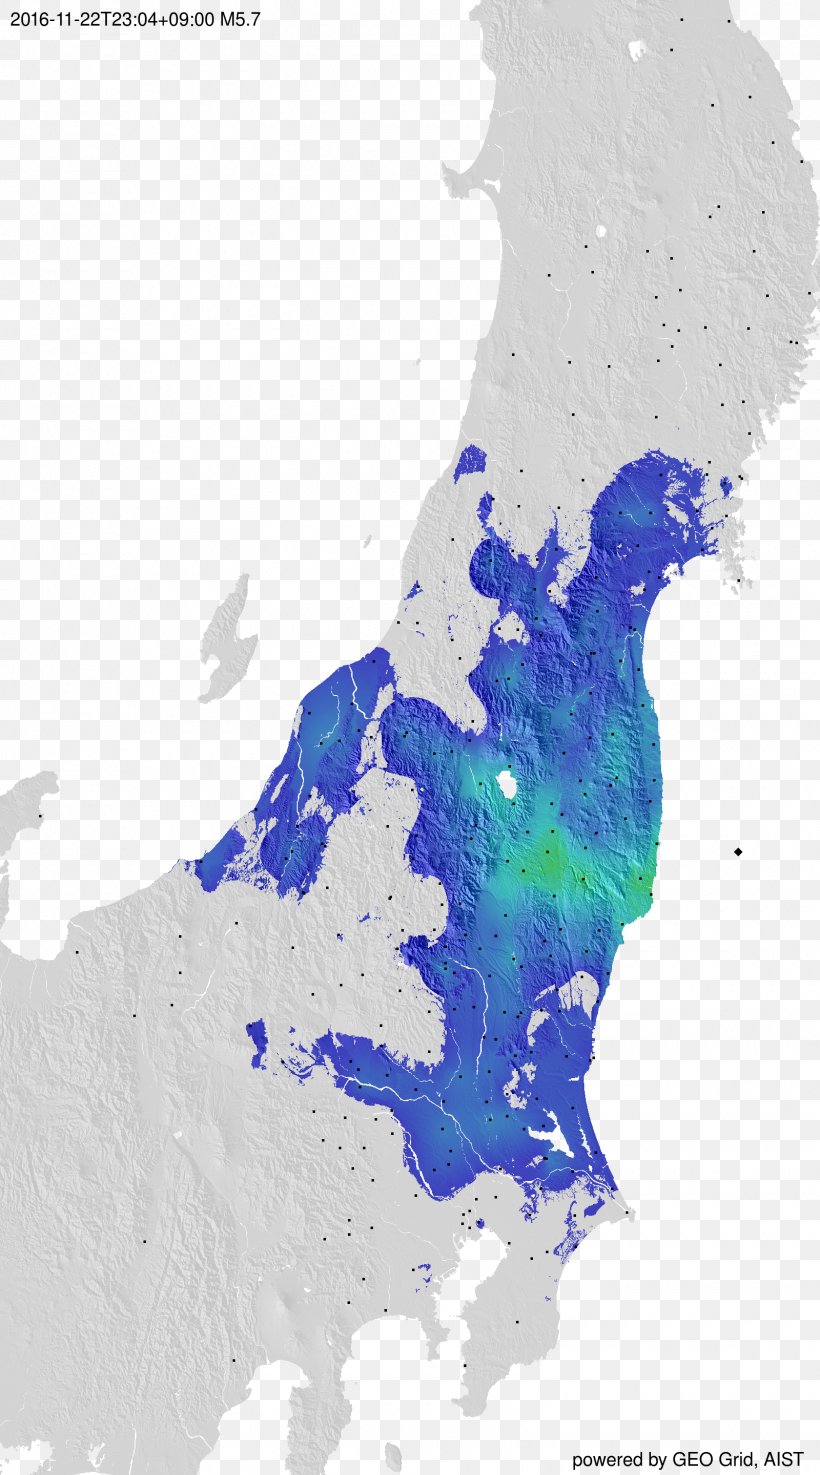 Water Map Tuberculosis Kanto, PNG, 1600x2880px, Water, Kanto, Map, Tuberculosis, World Download Free